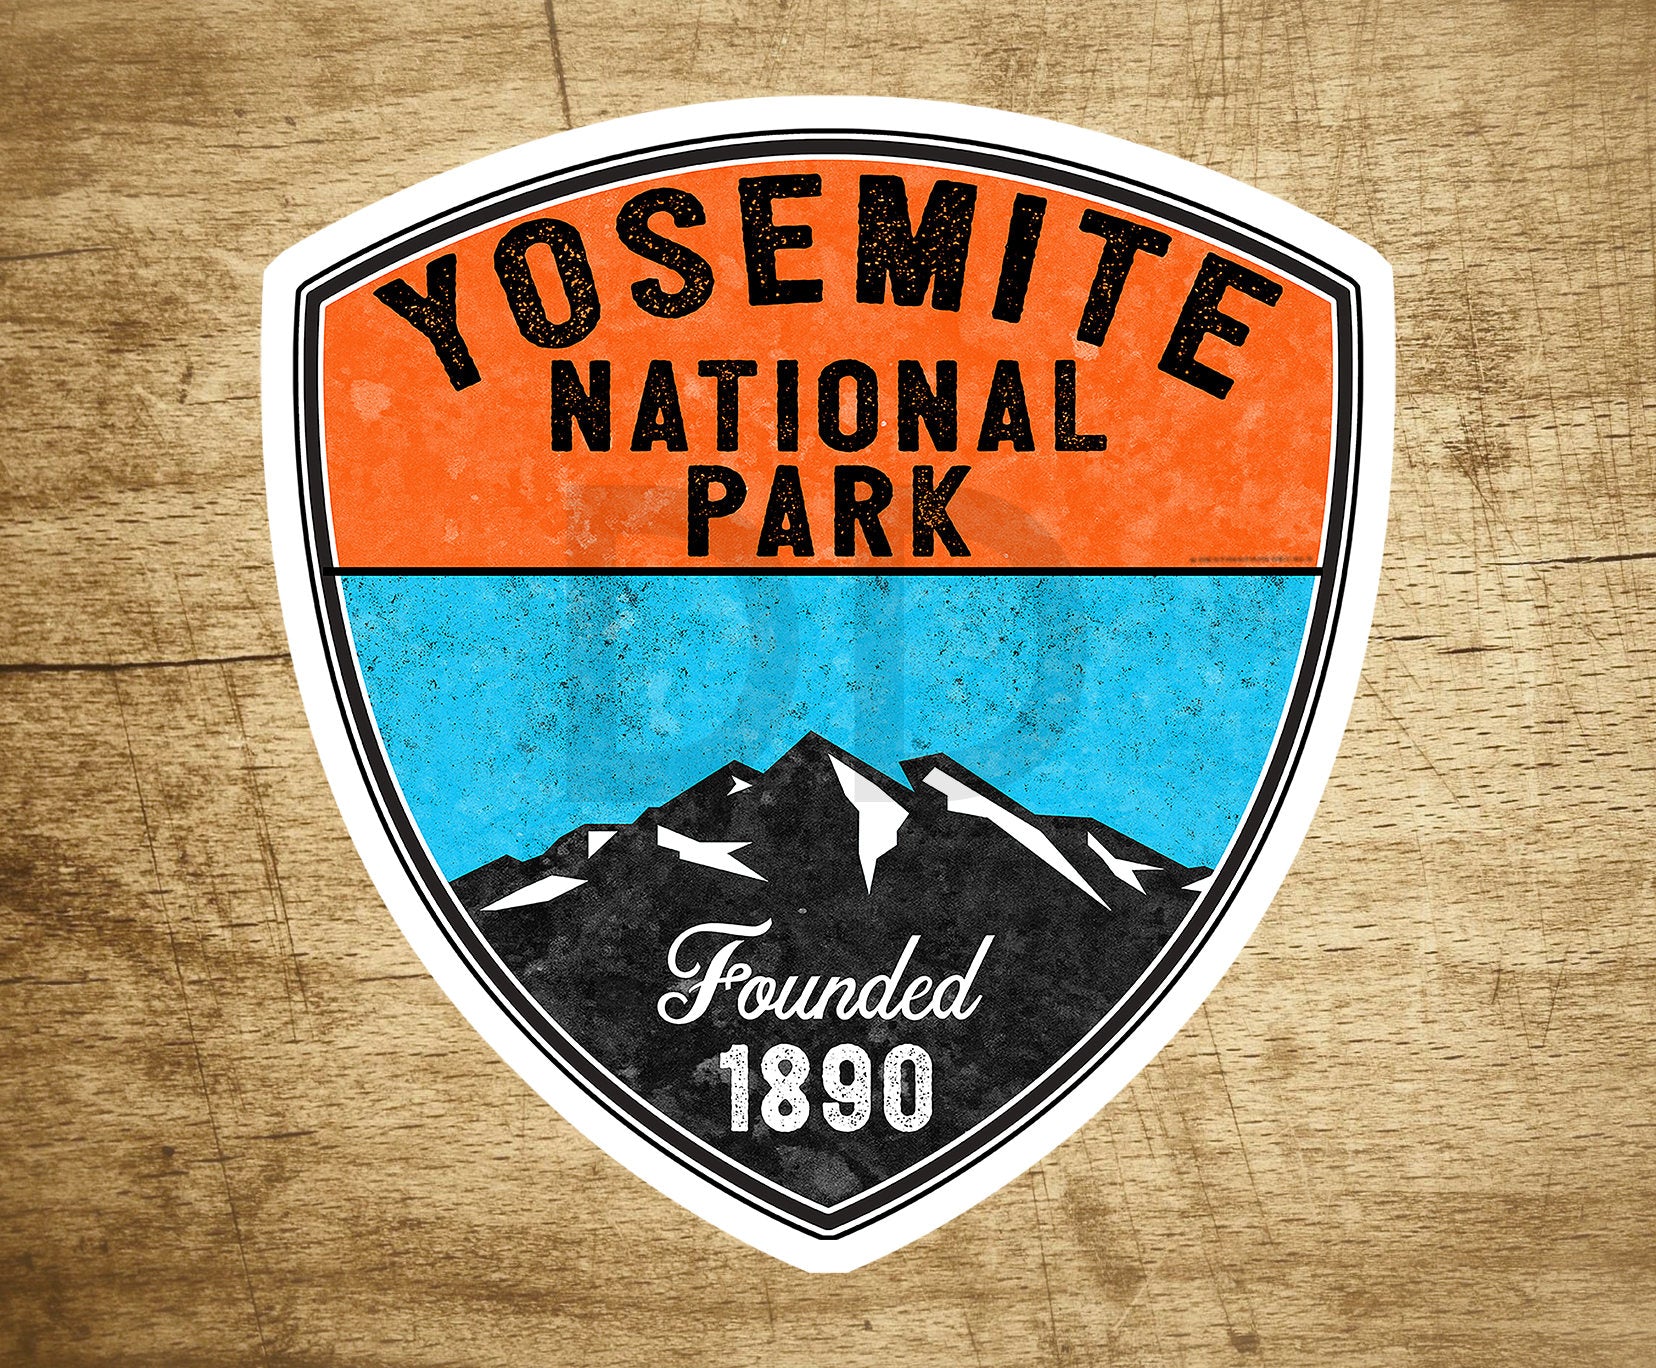 YOSEMITE NATIONAL PARK California Vinyl Sticker Bear Mountain Hiking Camping Climbing Decal 3.1" X 3"